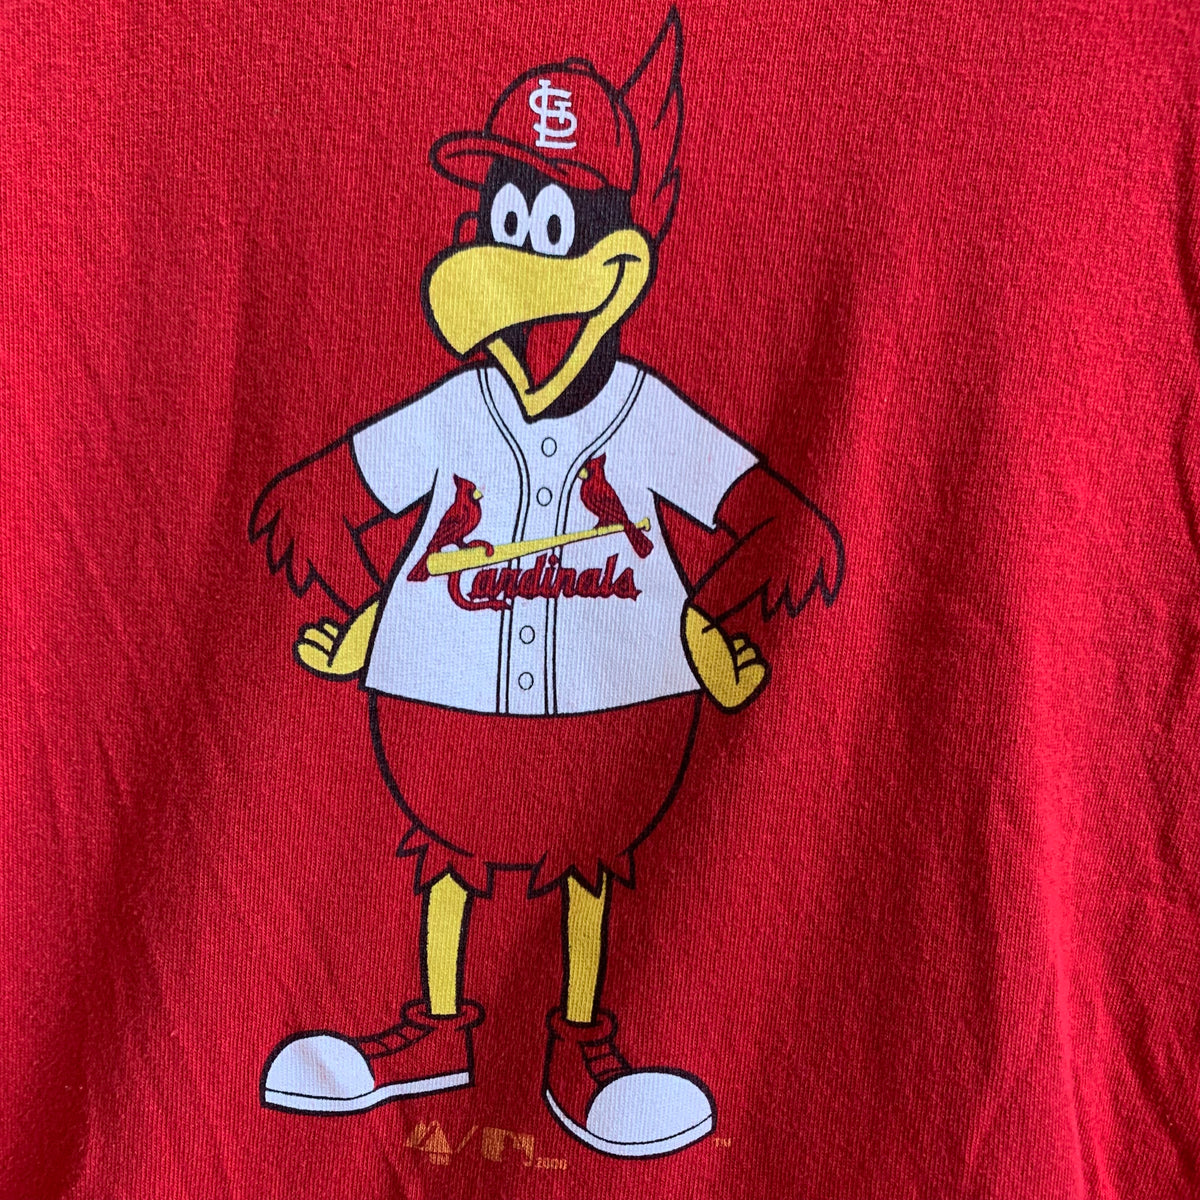 Vintage Logo 7 St. Louis Cardinals sweatshirt in